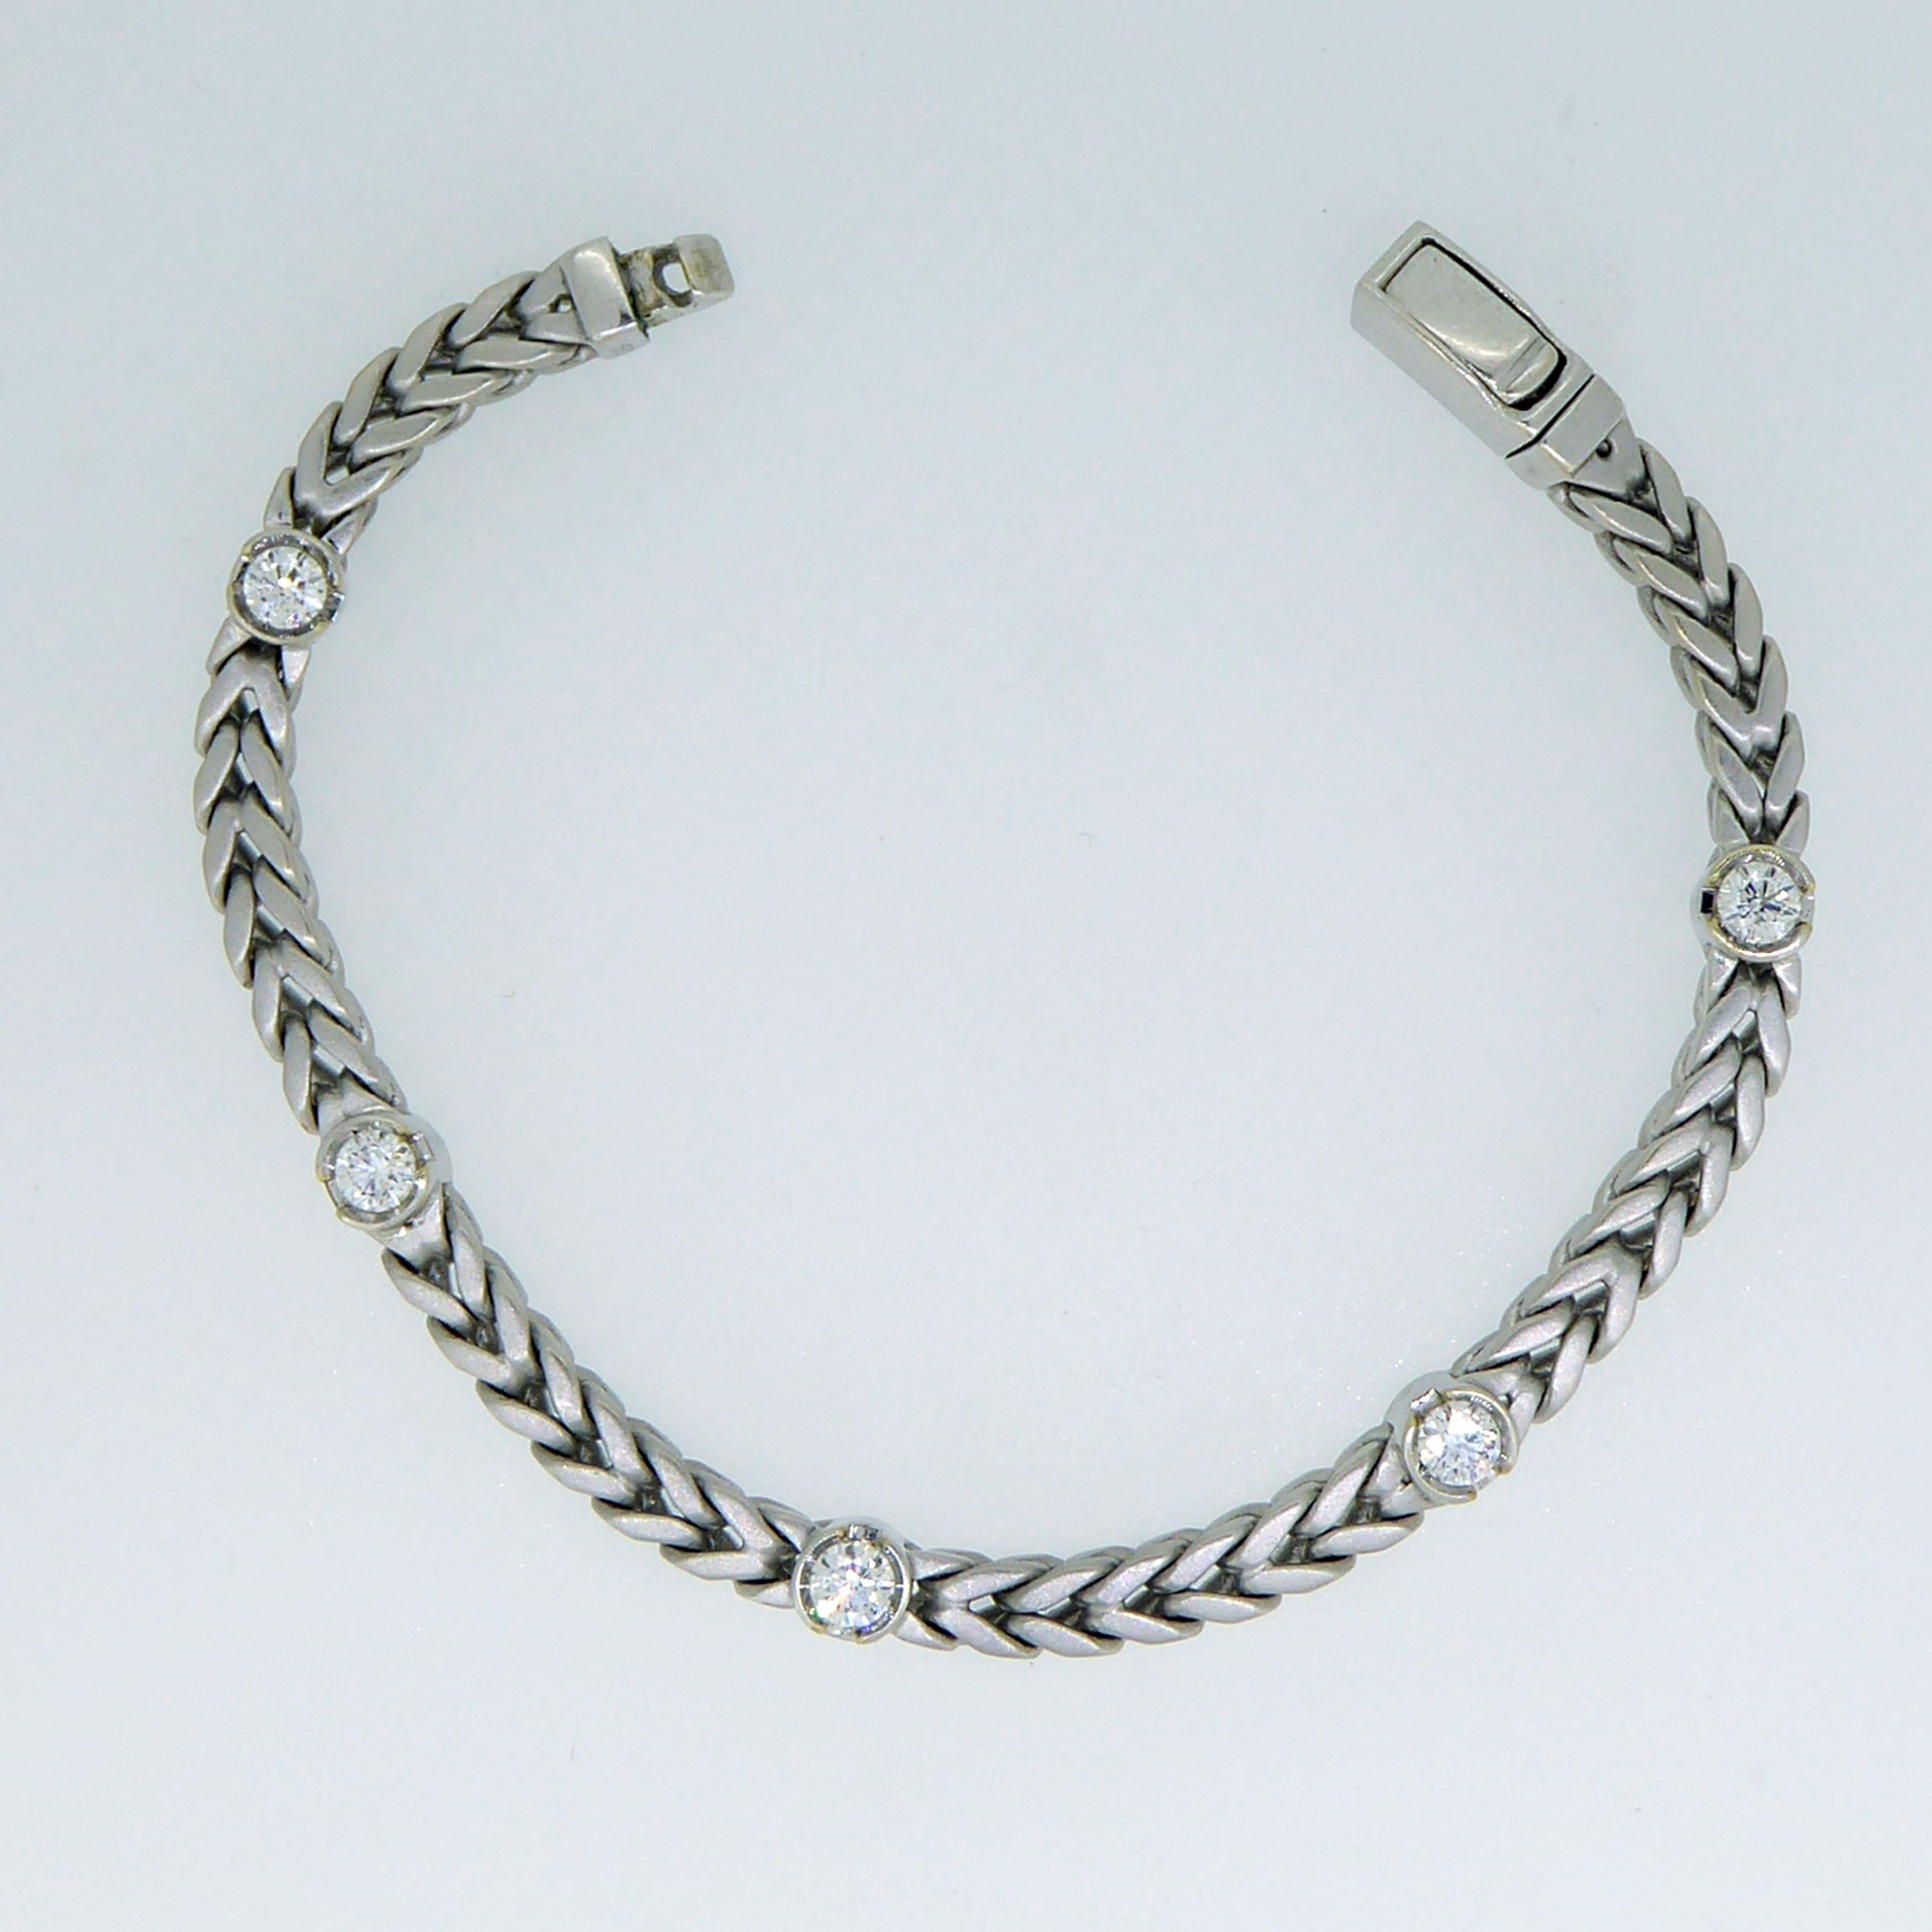 Round Cut Pre-Owned 1.25 Carat Diamond Line Bracelet, White Gold Franco Link